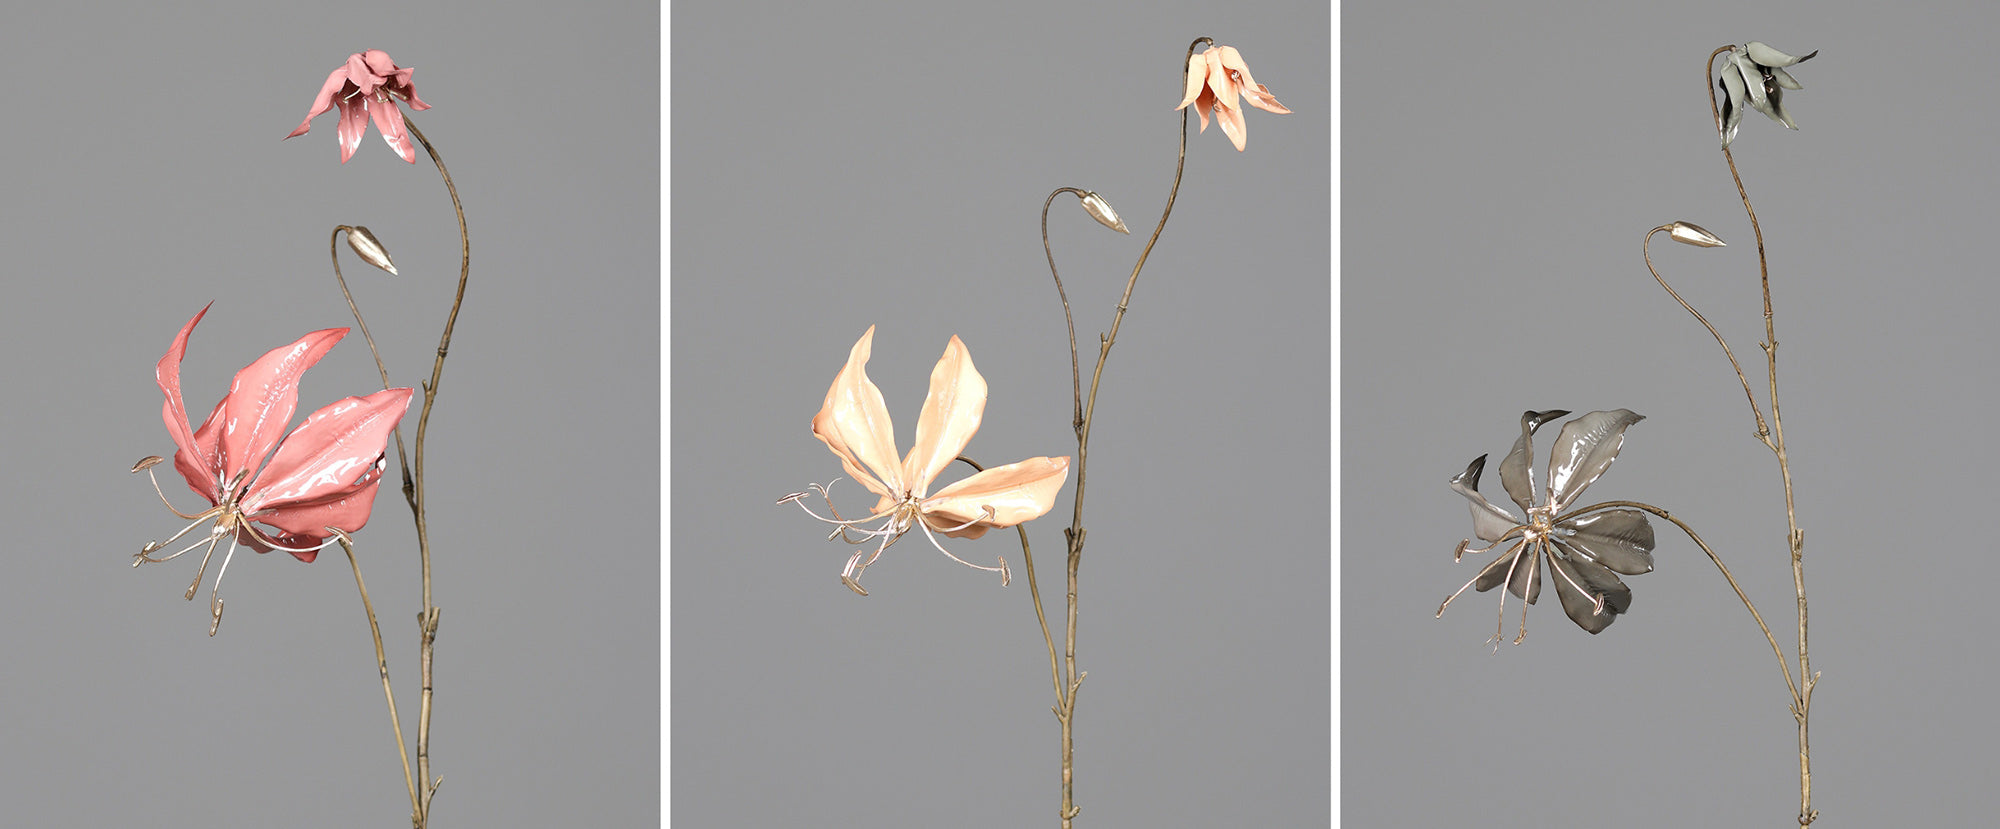 Fényes szürke színű koronásliliom művirág.